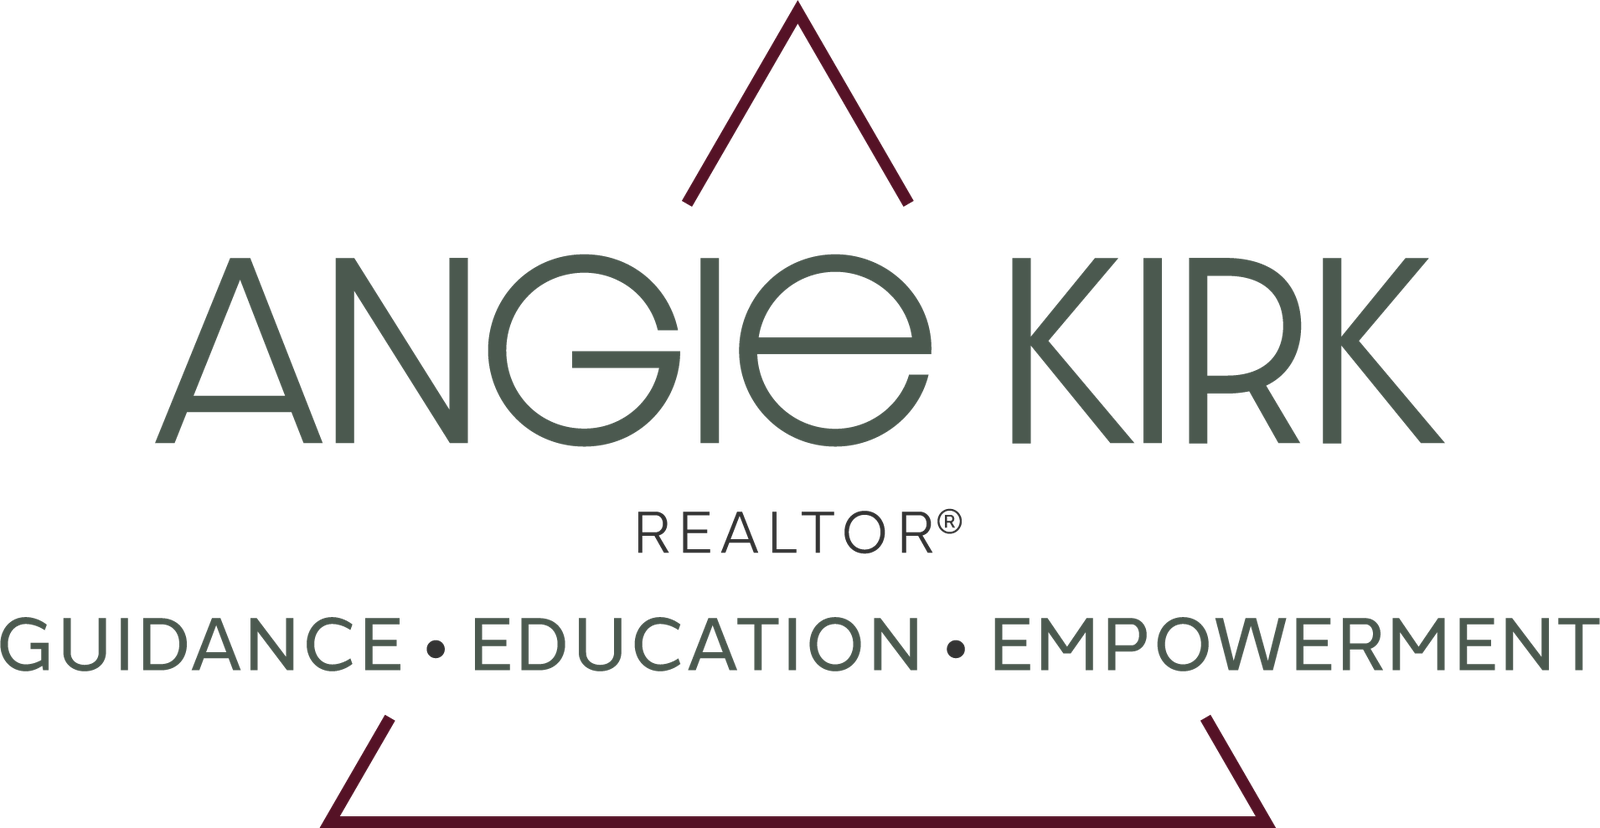 Angie Kirk - header brand logo